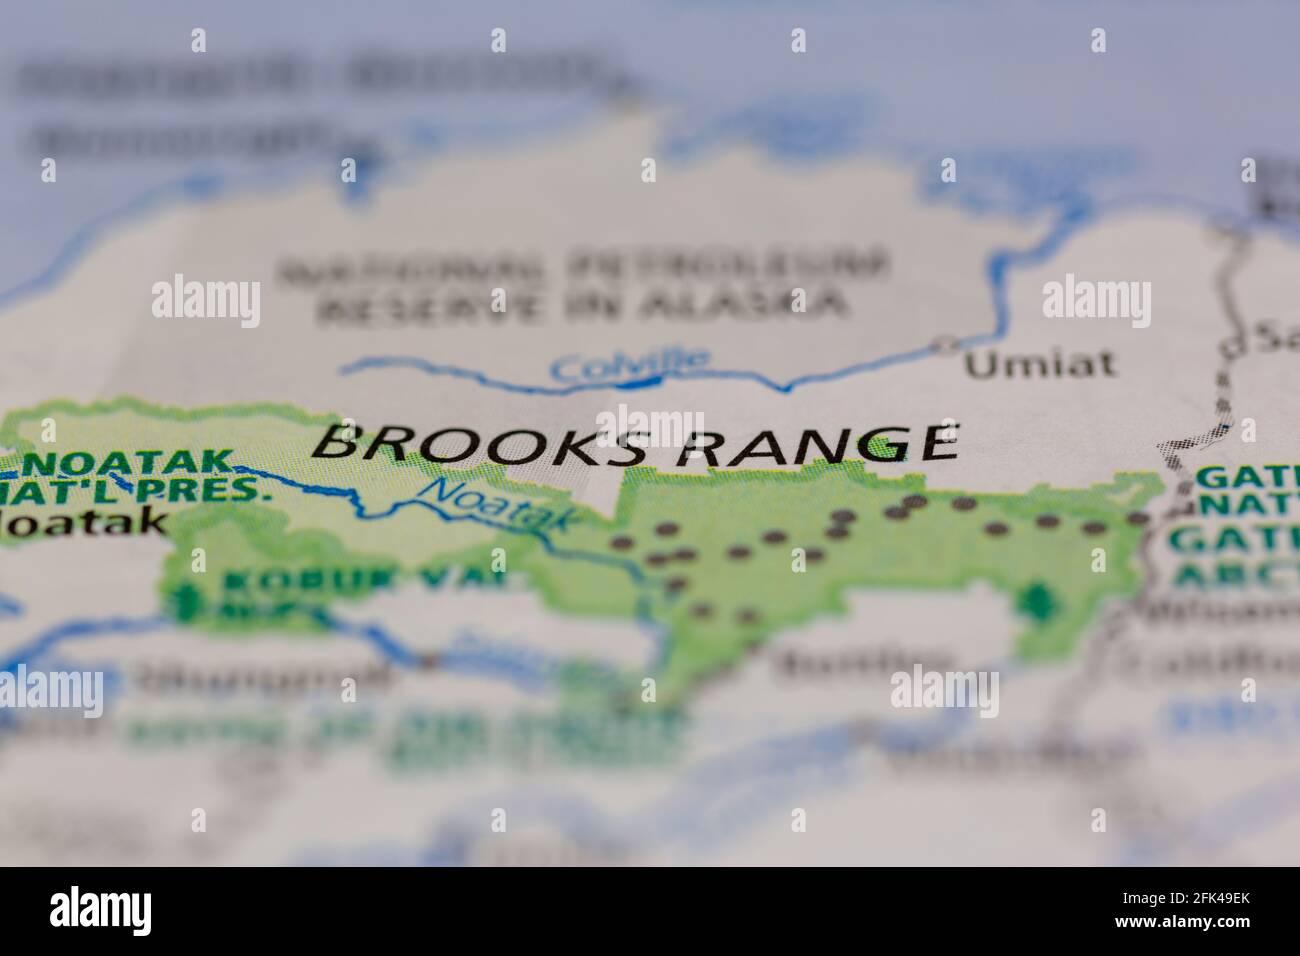 brooks range map